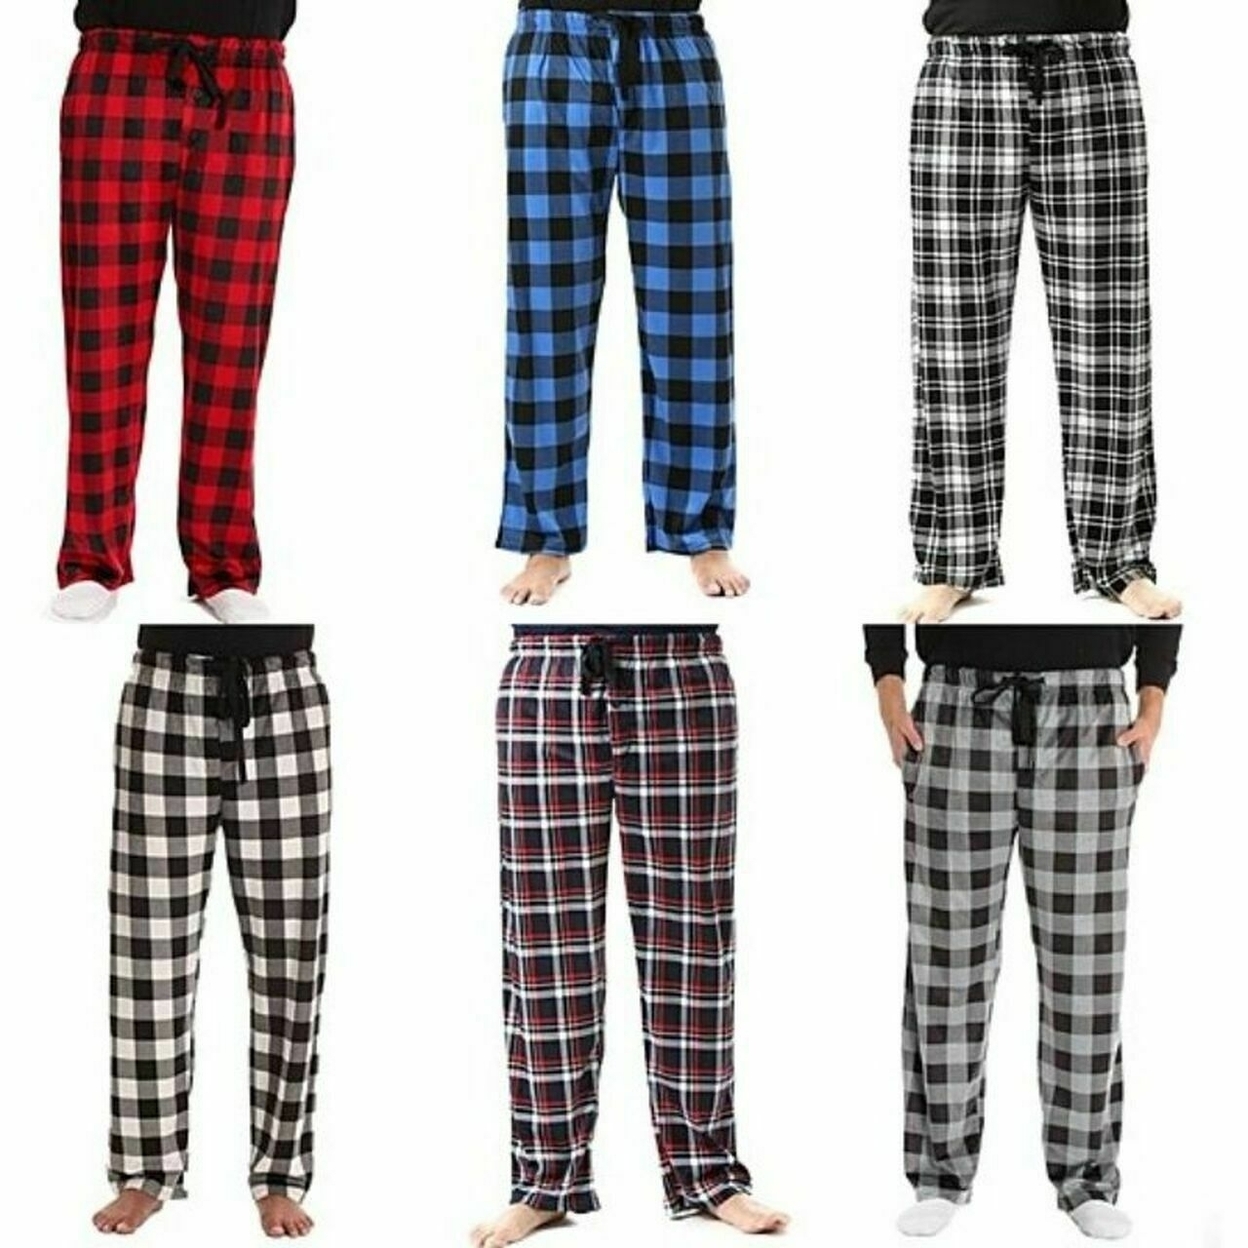 2-Pack: Men's Ultra Soft Cozy Flannel Fleece Plaid Pajama Sleep Bottom Lounge Pants - Black & Black, Small